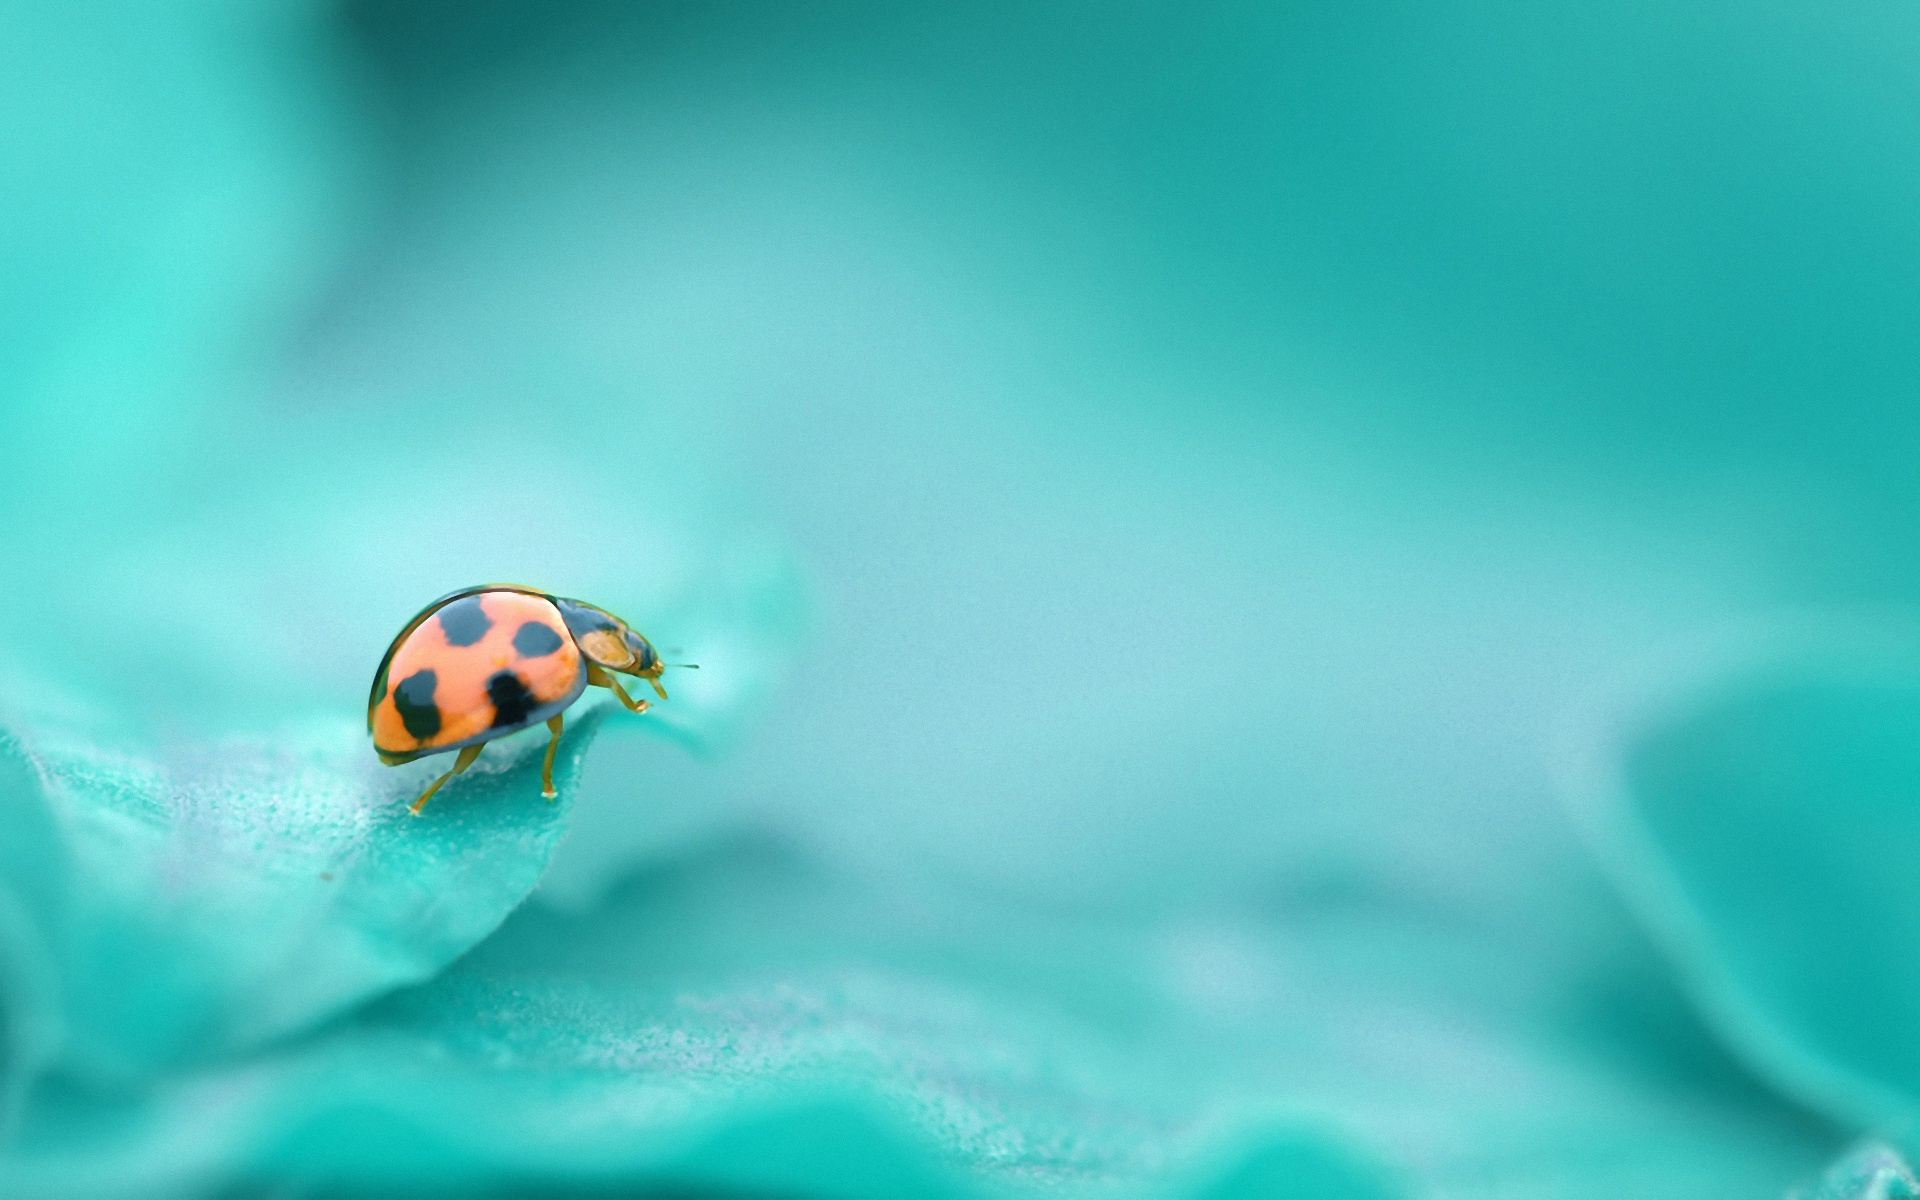 Cute Ladybug Pictures Magic4walls